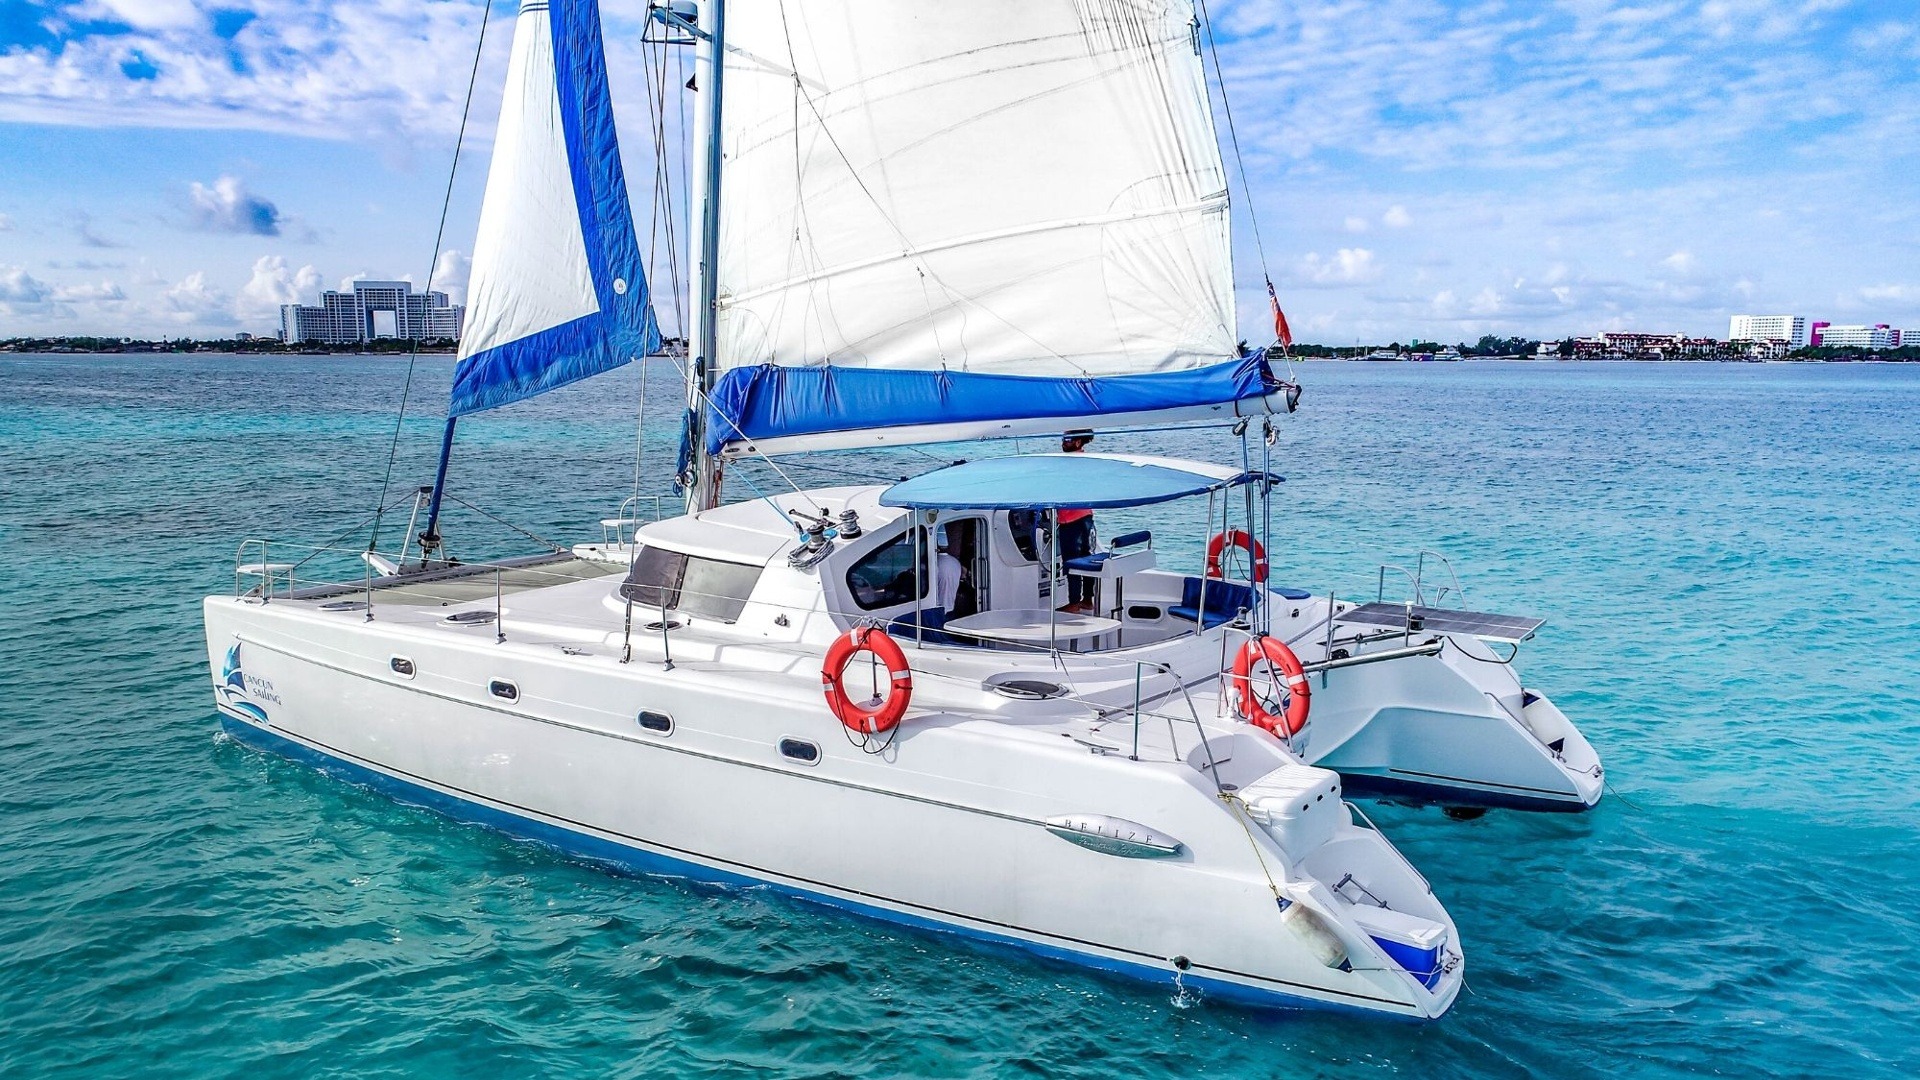 4 Vents - Isla Mujeres Catamaran Tour - Cancun Sailing